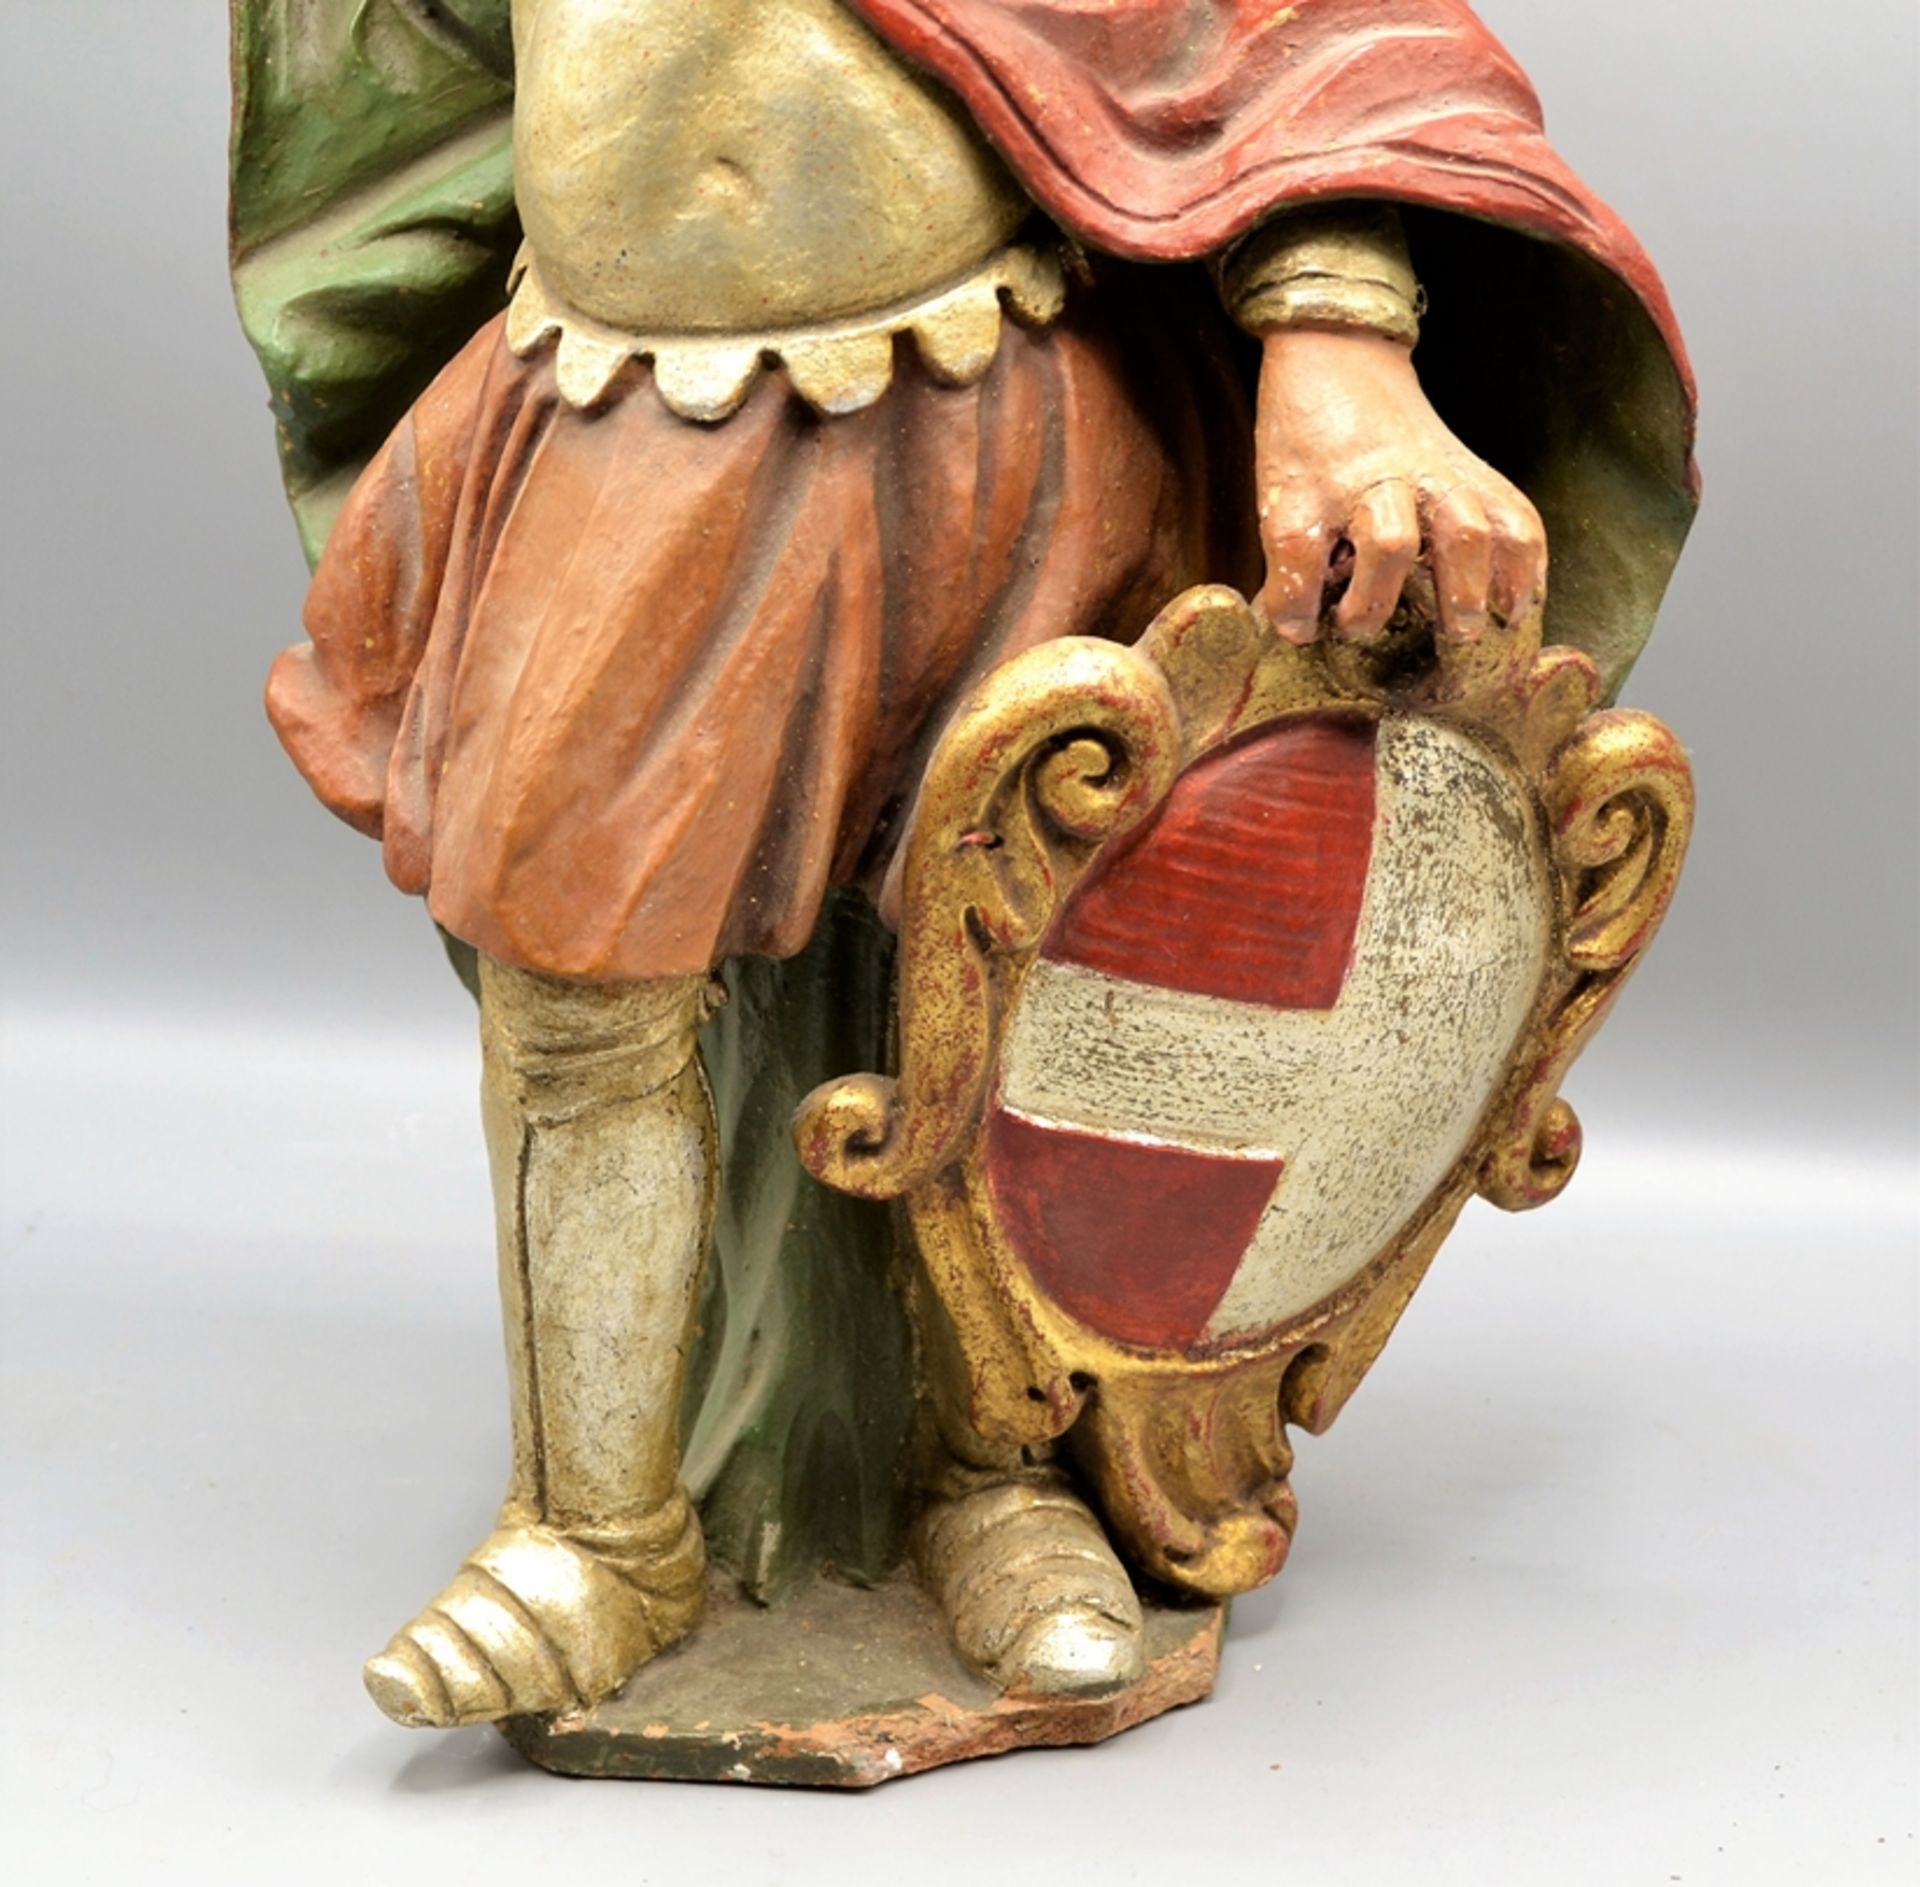 Ritterheiliger Terracotta um 1800 Wasserburg ? ca. 54 cm, Finger re. Hand beschädigt - Image 3 of 3